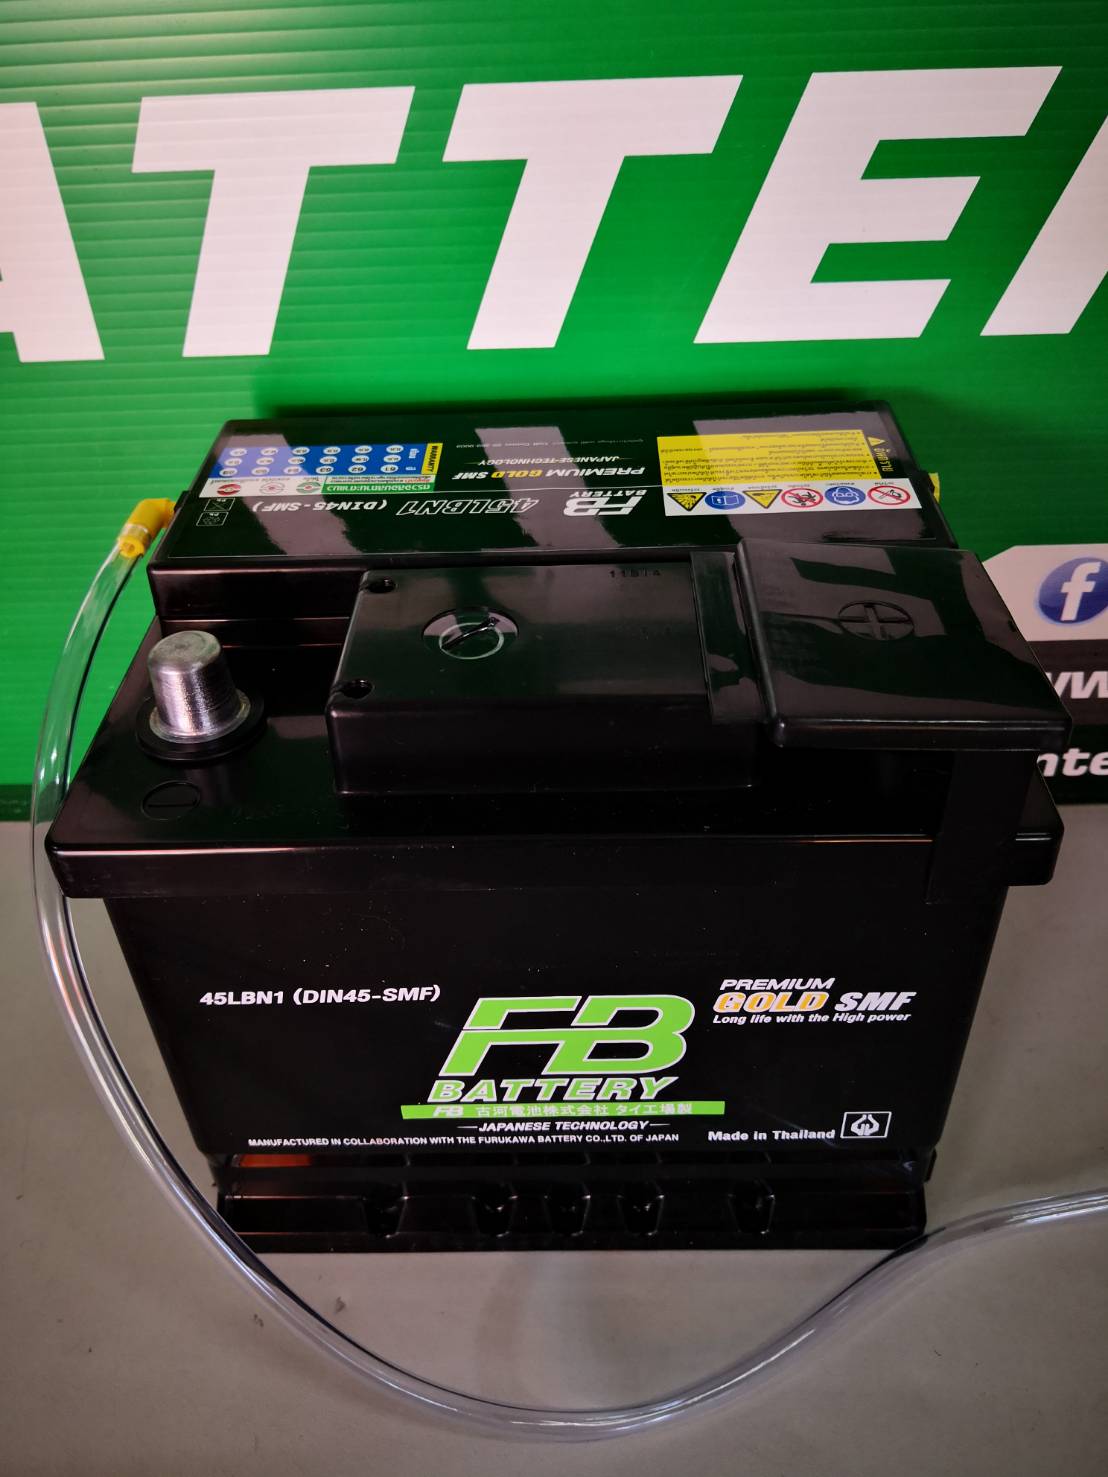 FB Battery แบตเตอรี่ รถยนต์ FB รุ่น GOLD DIN45 LBN1 (DIN45-SMF) แบตเตอรี่ชนิด Maintenance-Free ใม่ต้องเติมน้ำกลั่นตลอดอายุใช้งาน รับประกันโดย Siam Battery